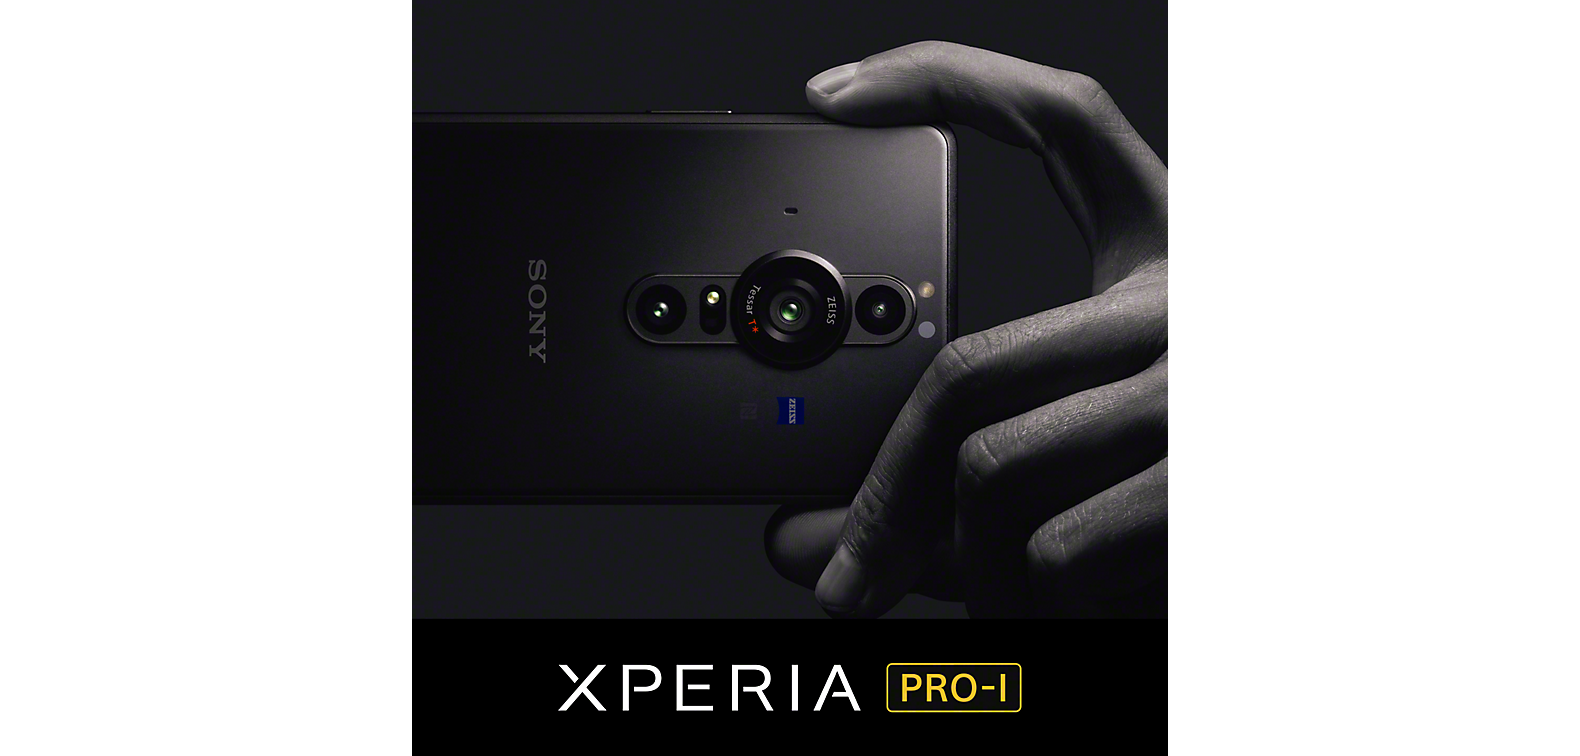 Crni pametni telefon Xperia PRO-I u ruci iznad logotipa Xperia PRO-I.